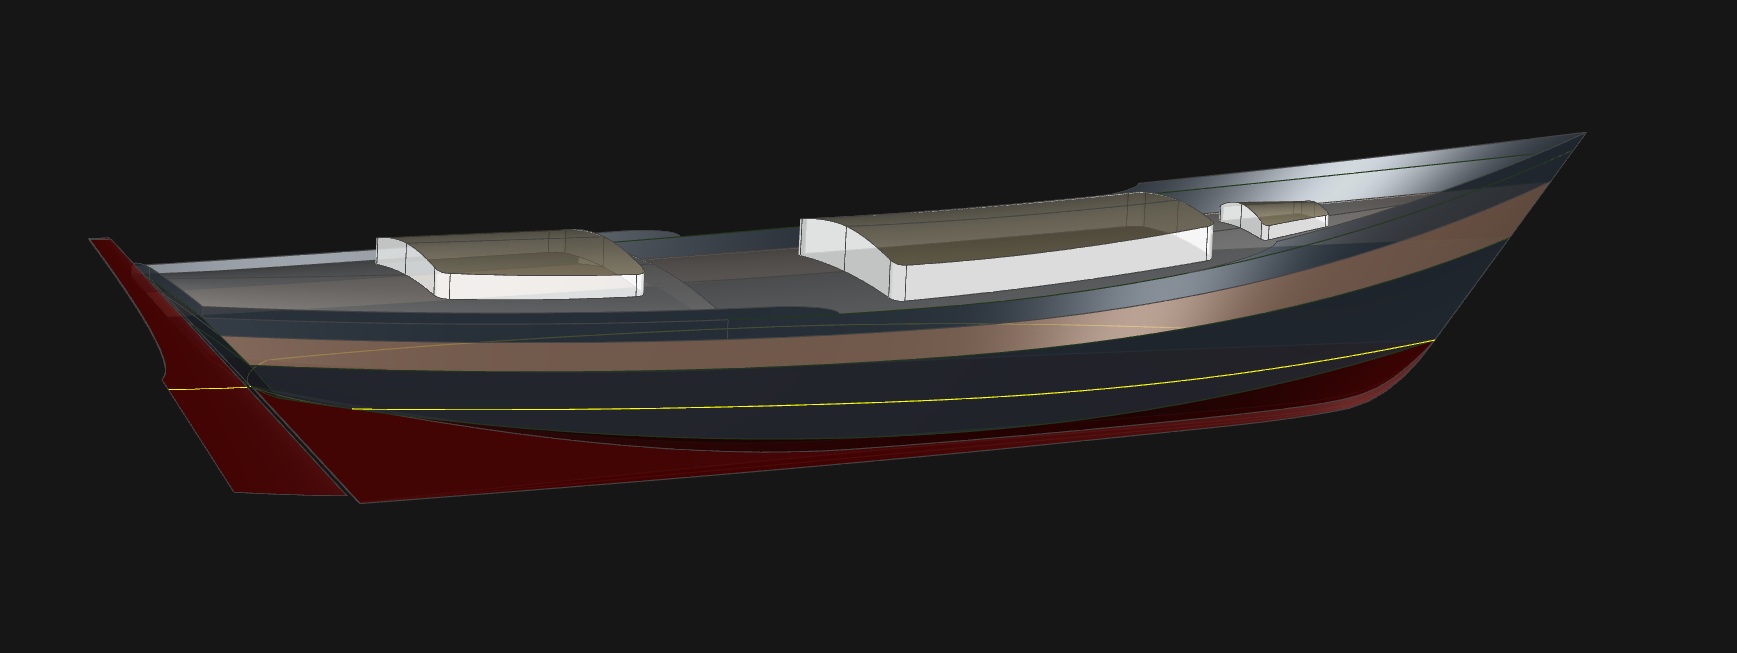 70' Ocean Cruising Skipjack - Kasten Marine Design, Inc.